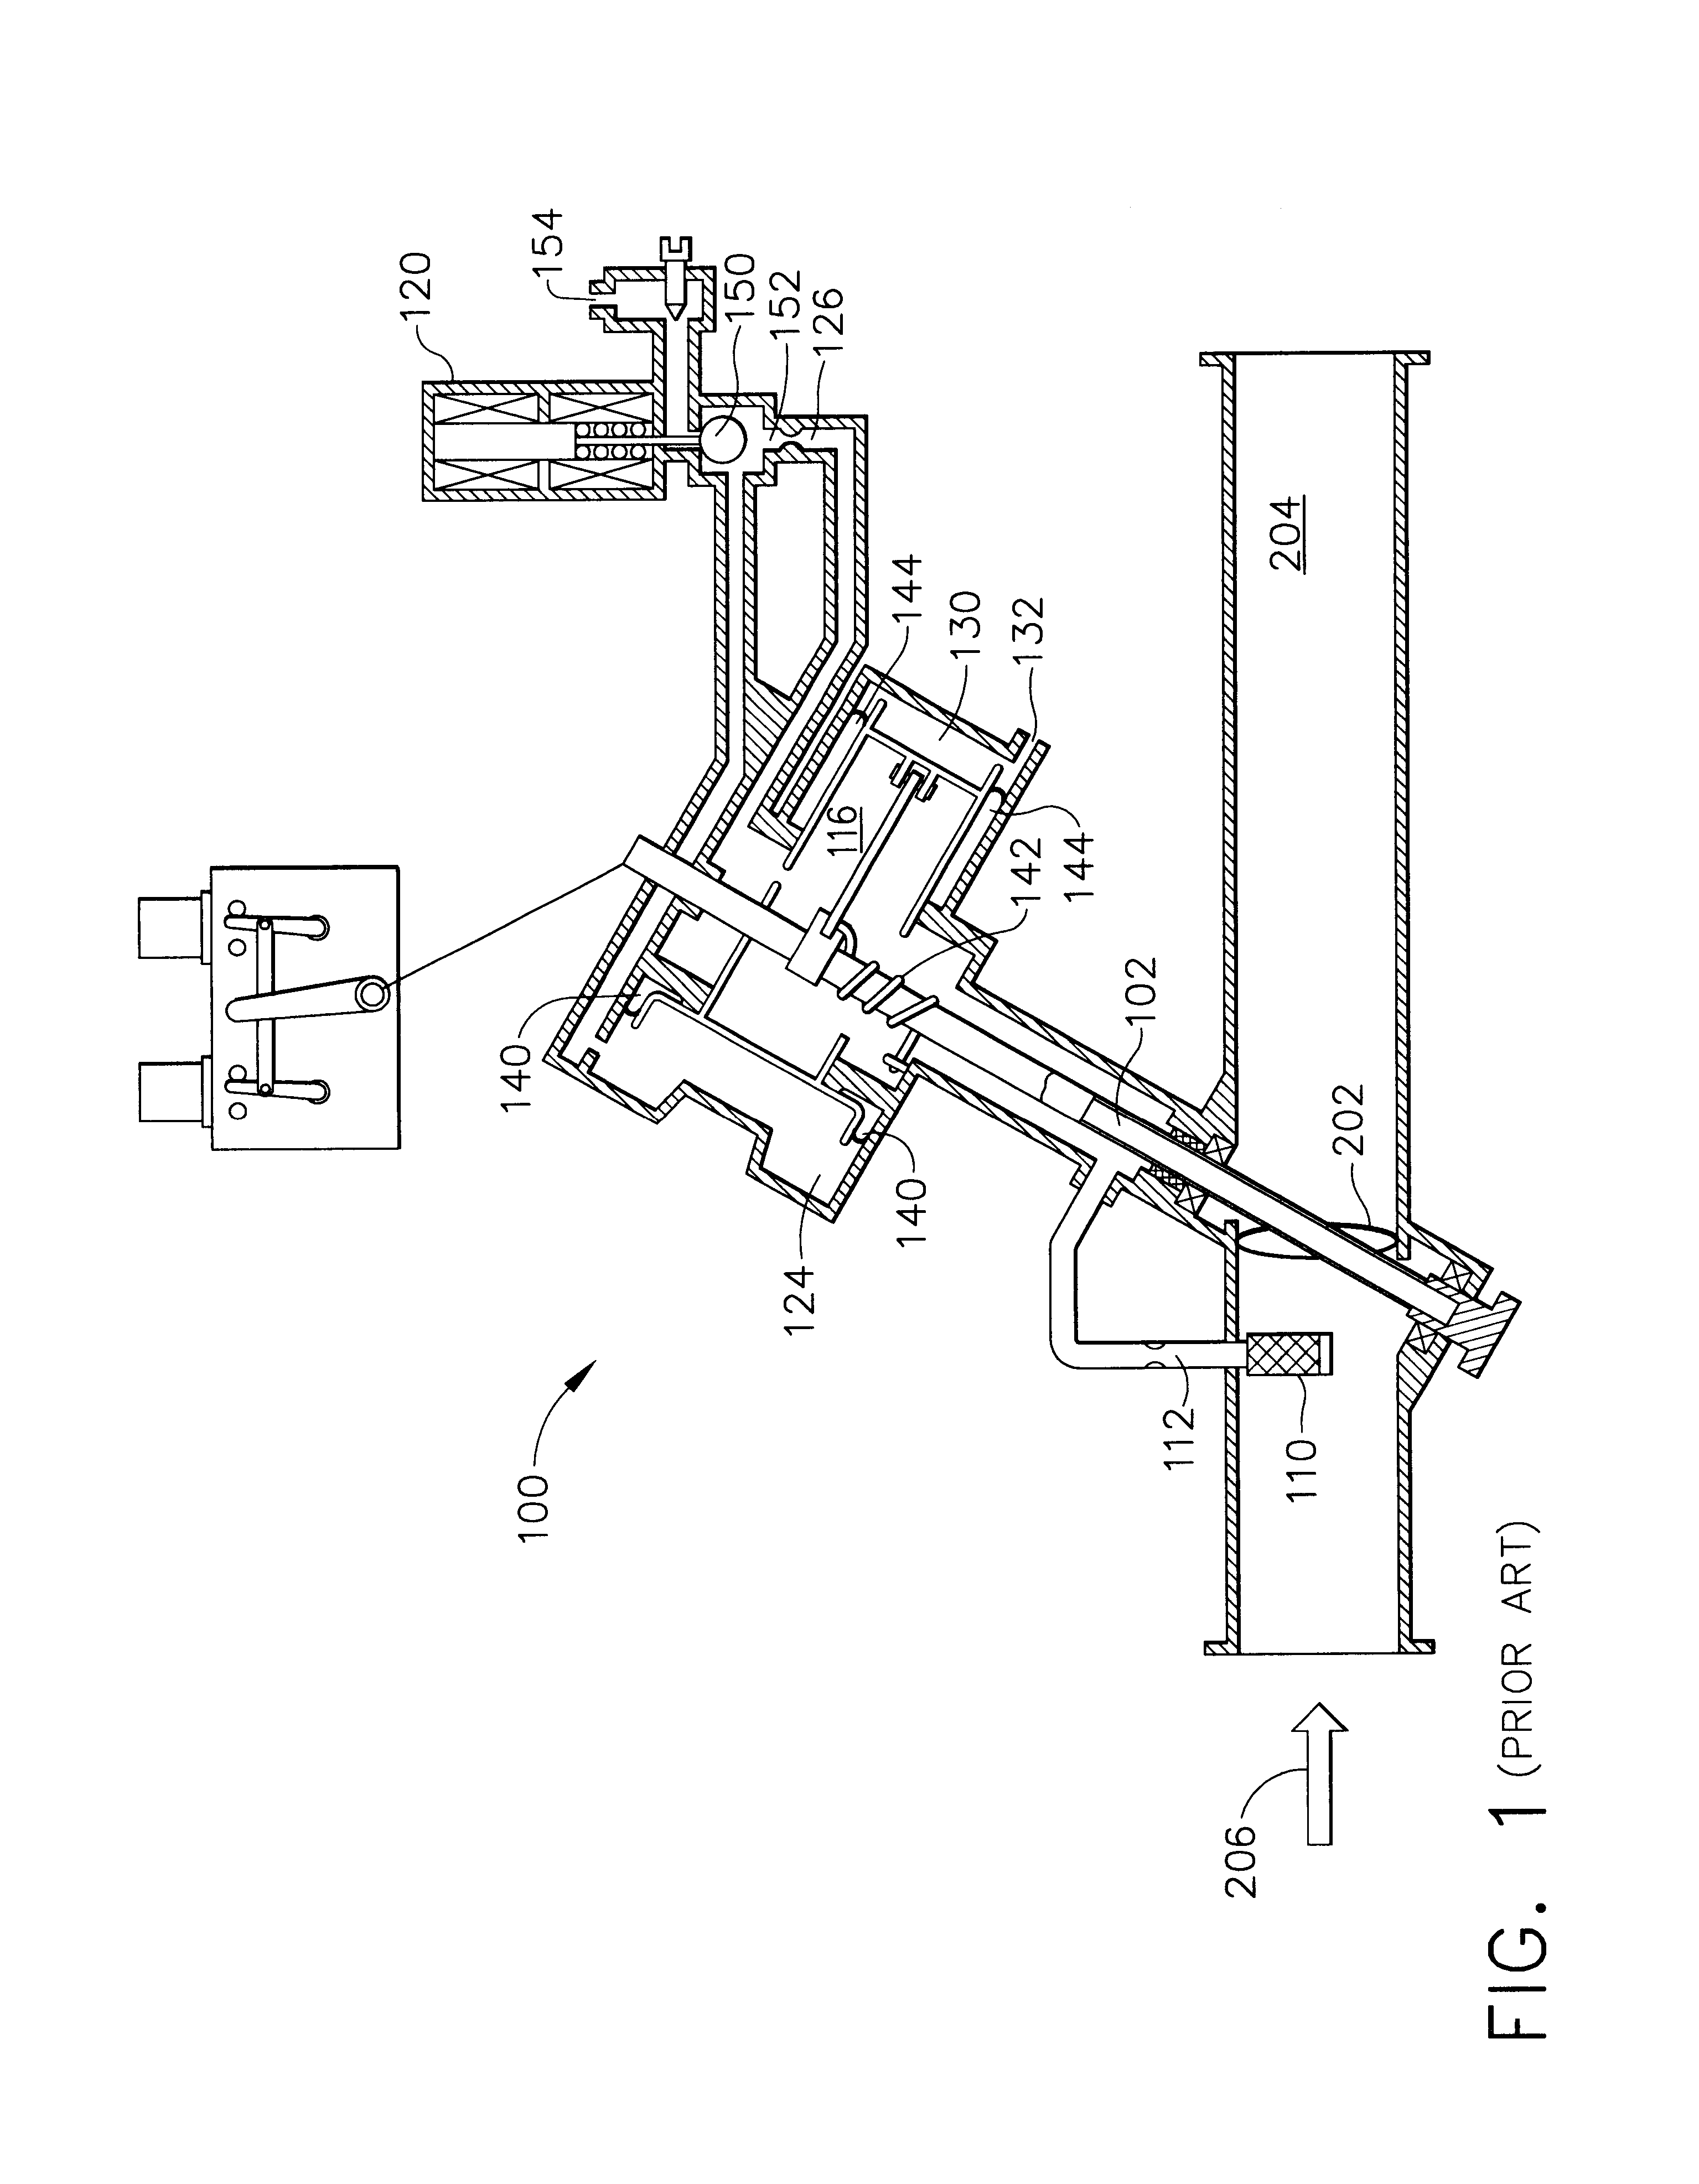 Micro volume actuator for an air turbine starter